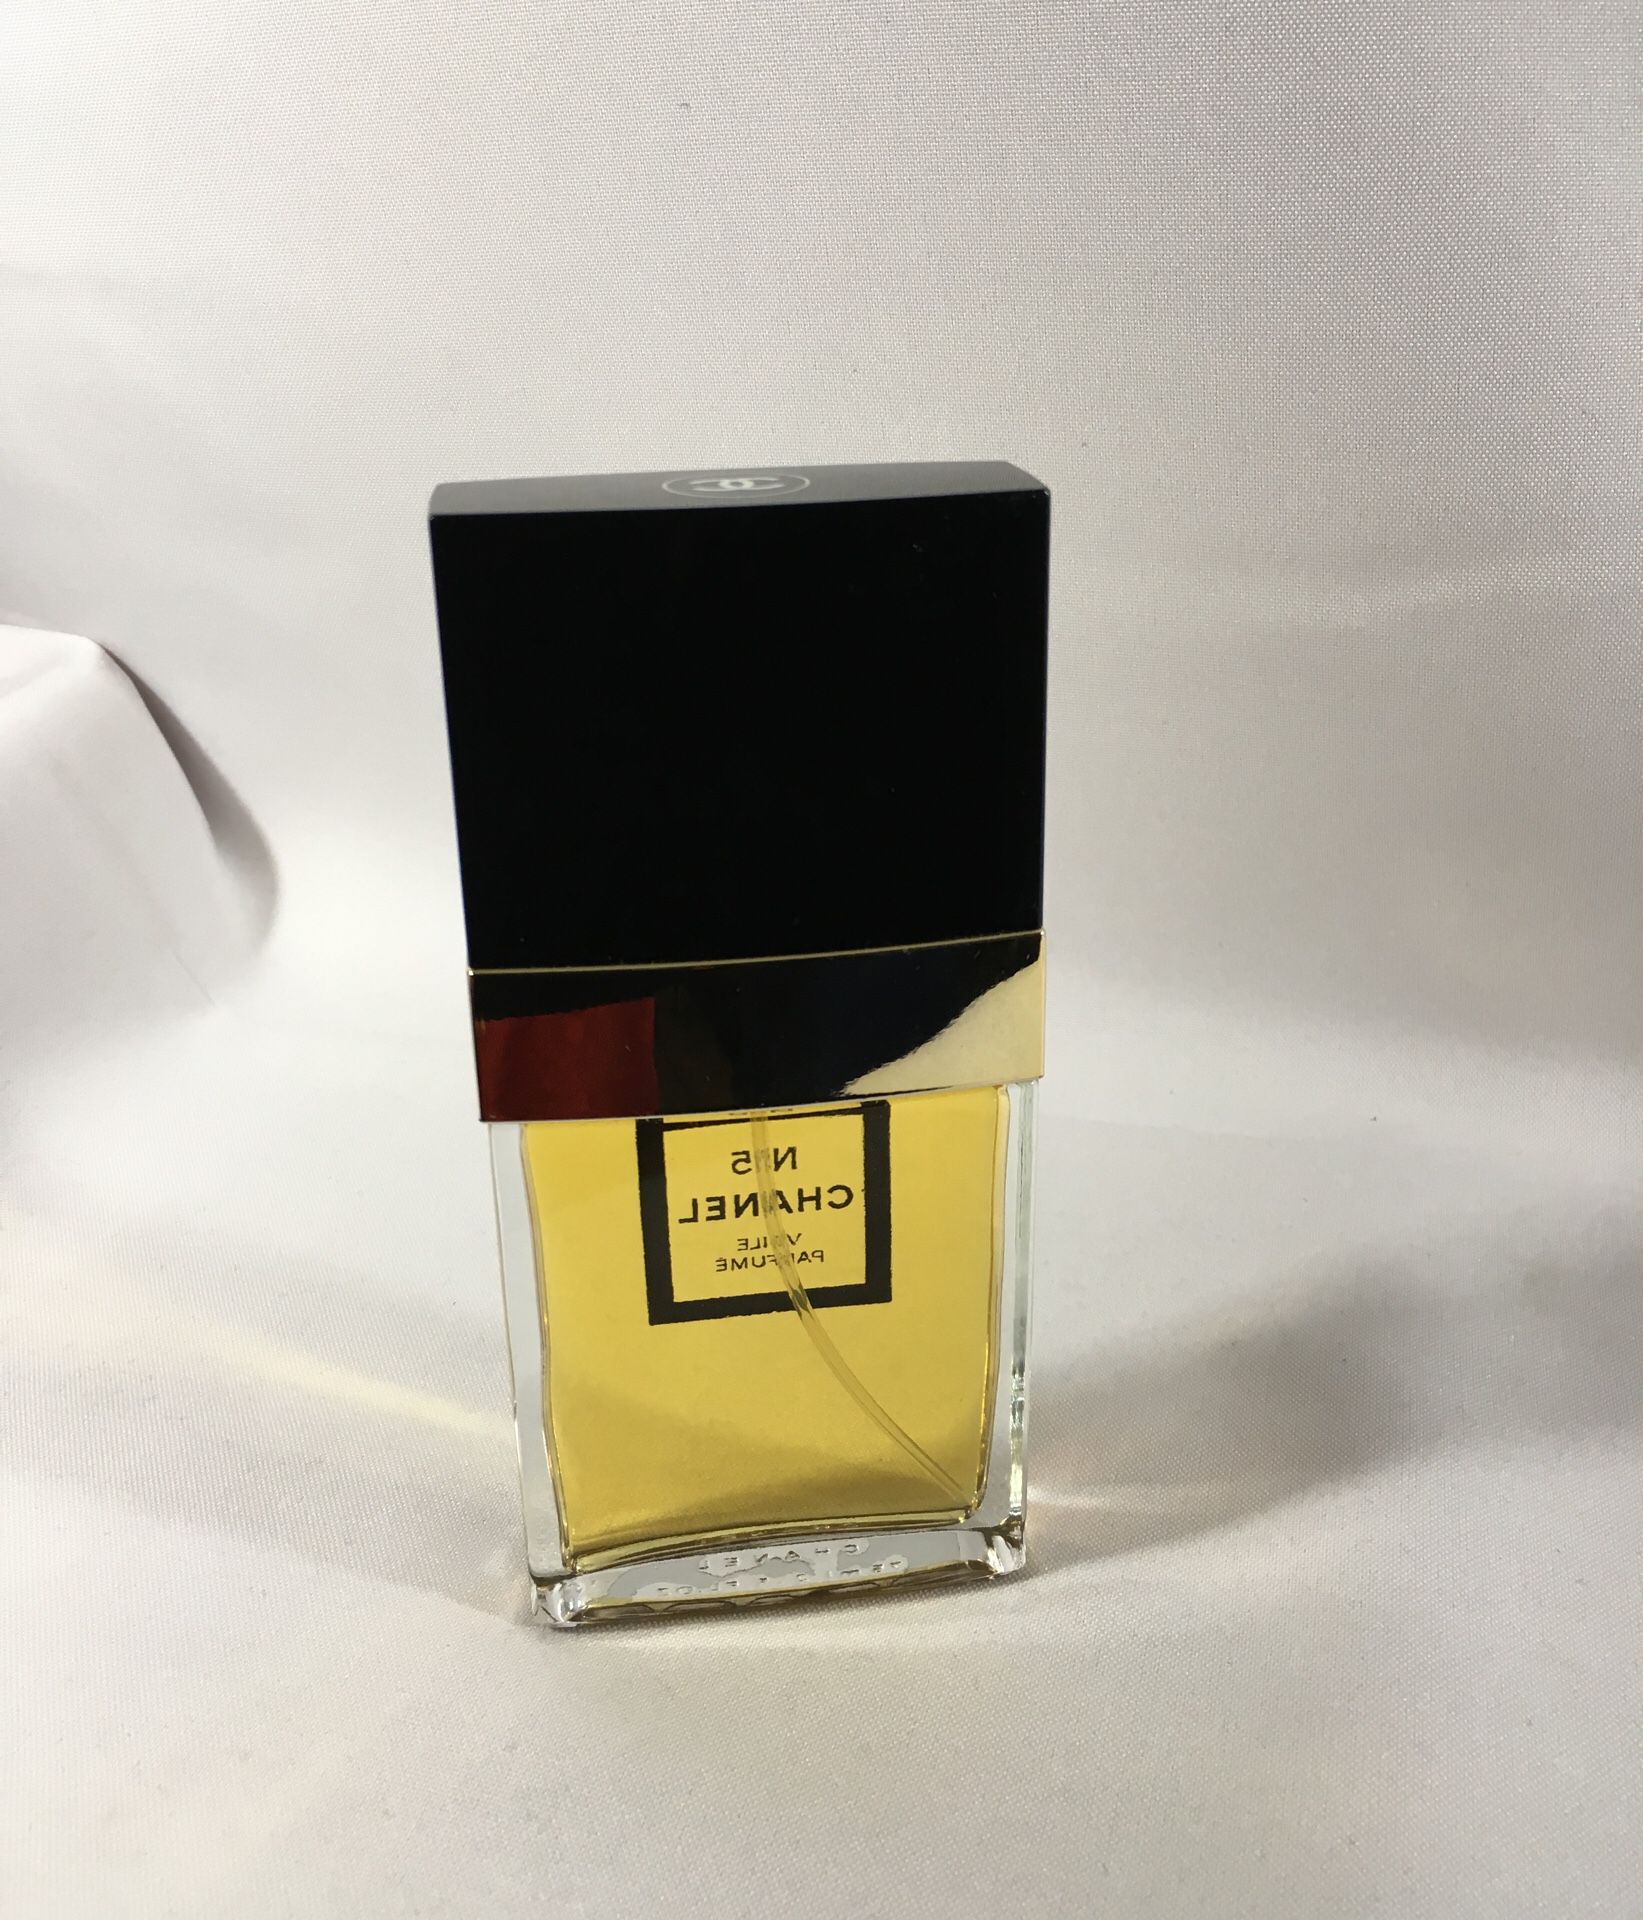 CHANEL No 5 “NEW” Voile Perfume Refreshing Body Mist 2.5 fl oz